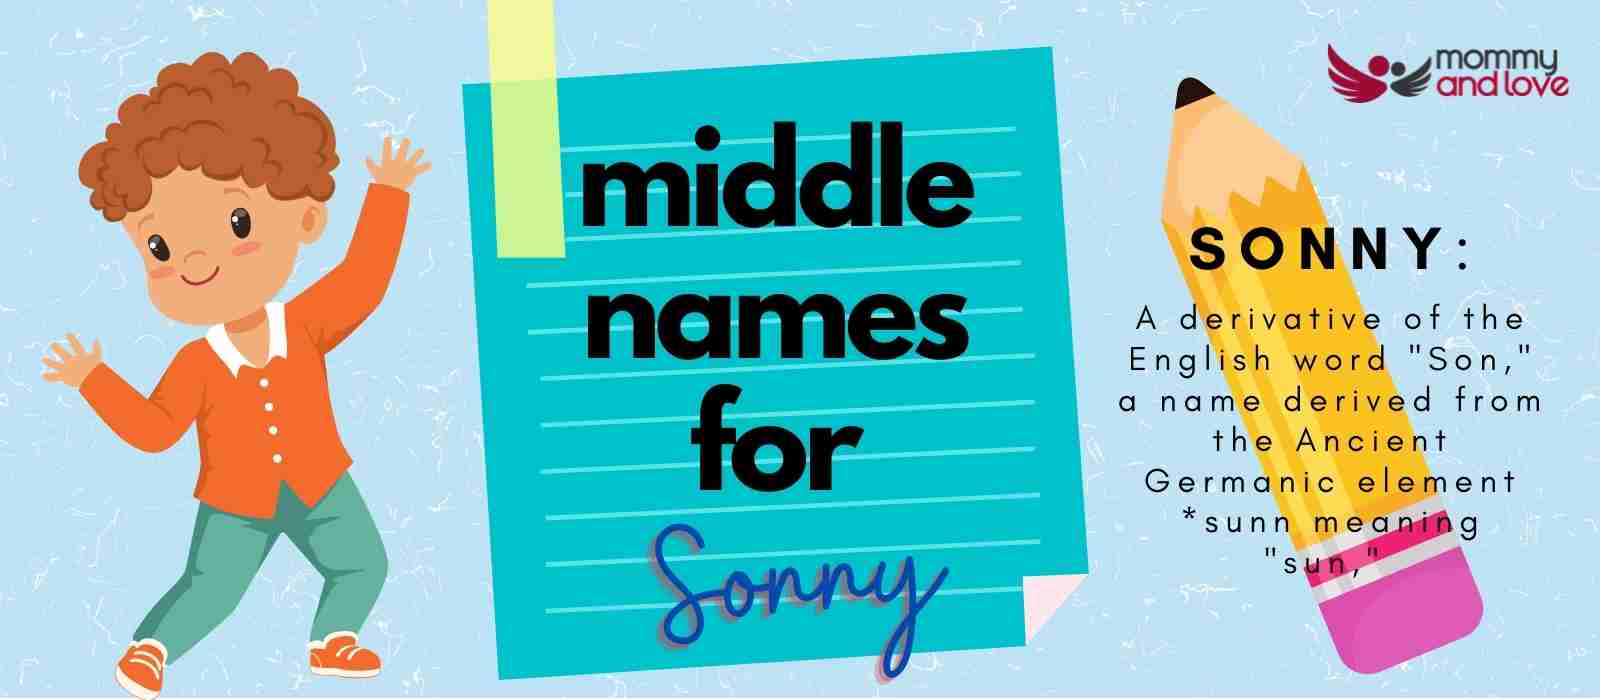 Middle Names for Sonny